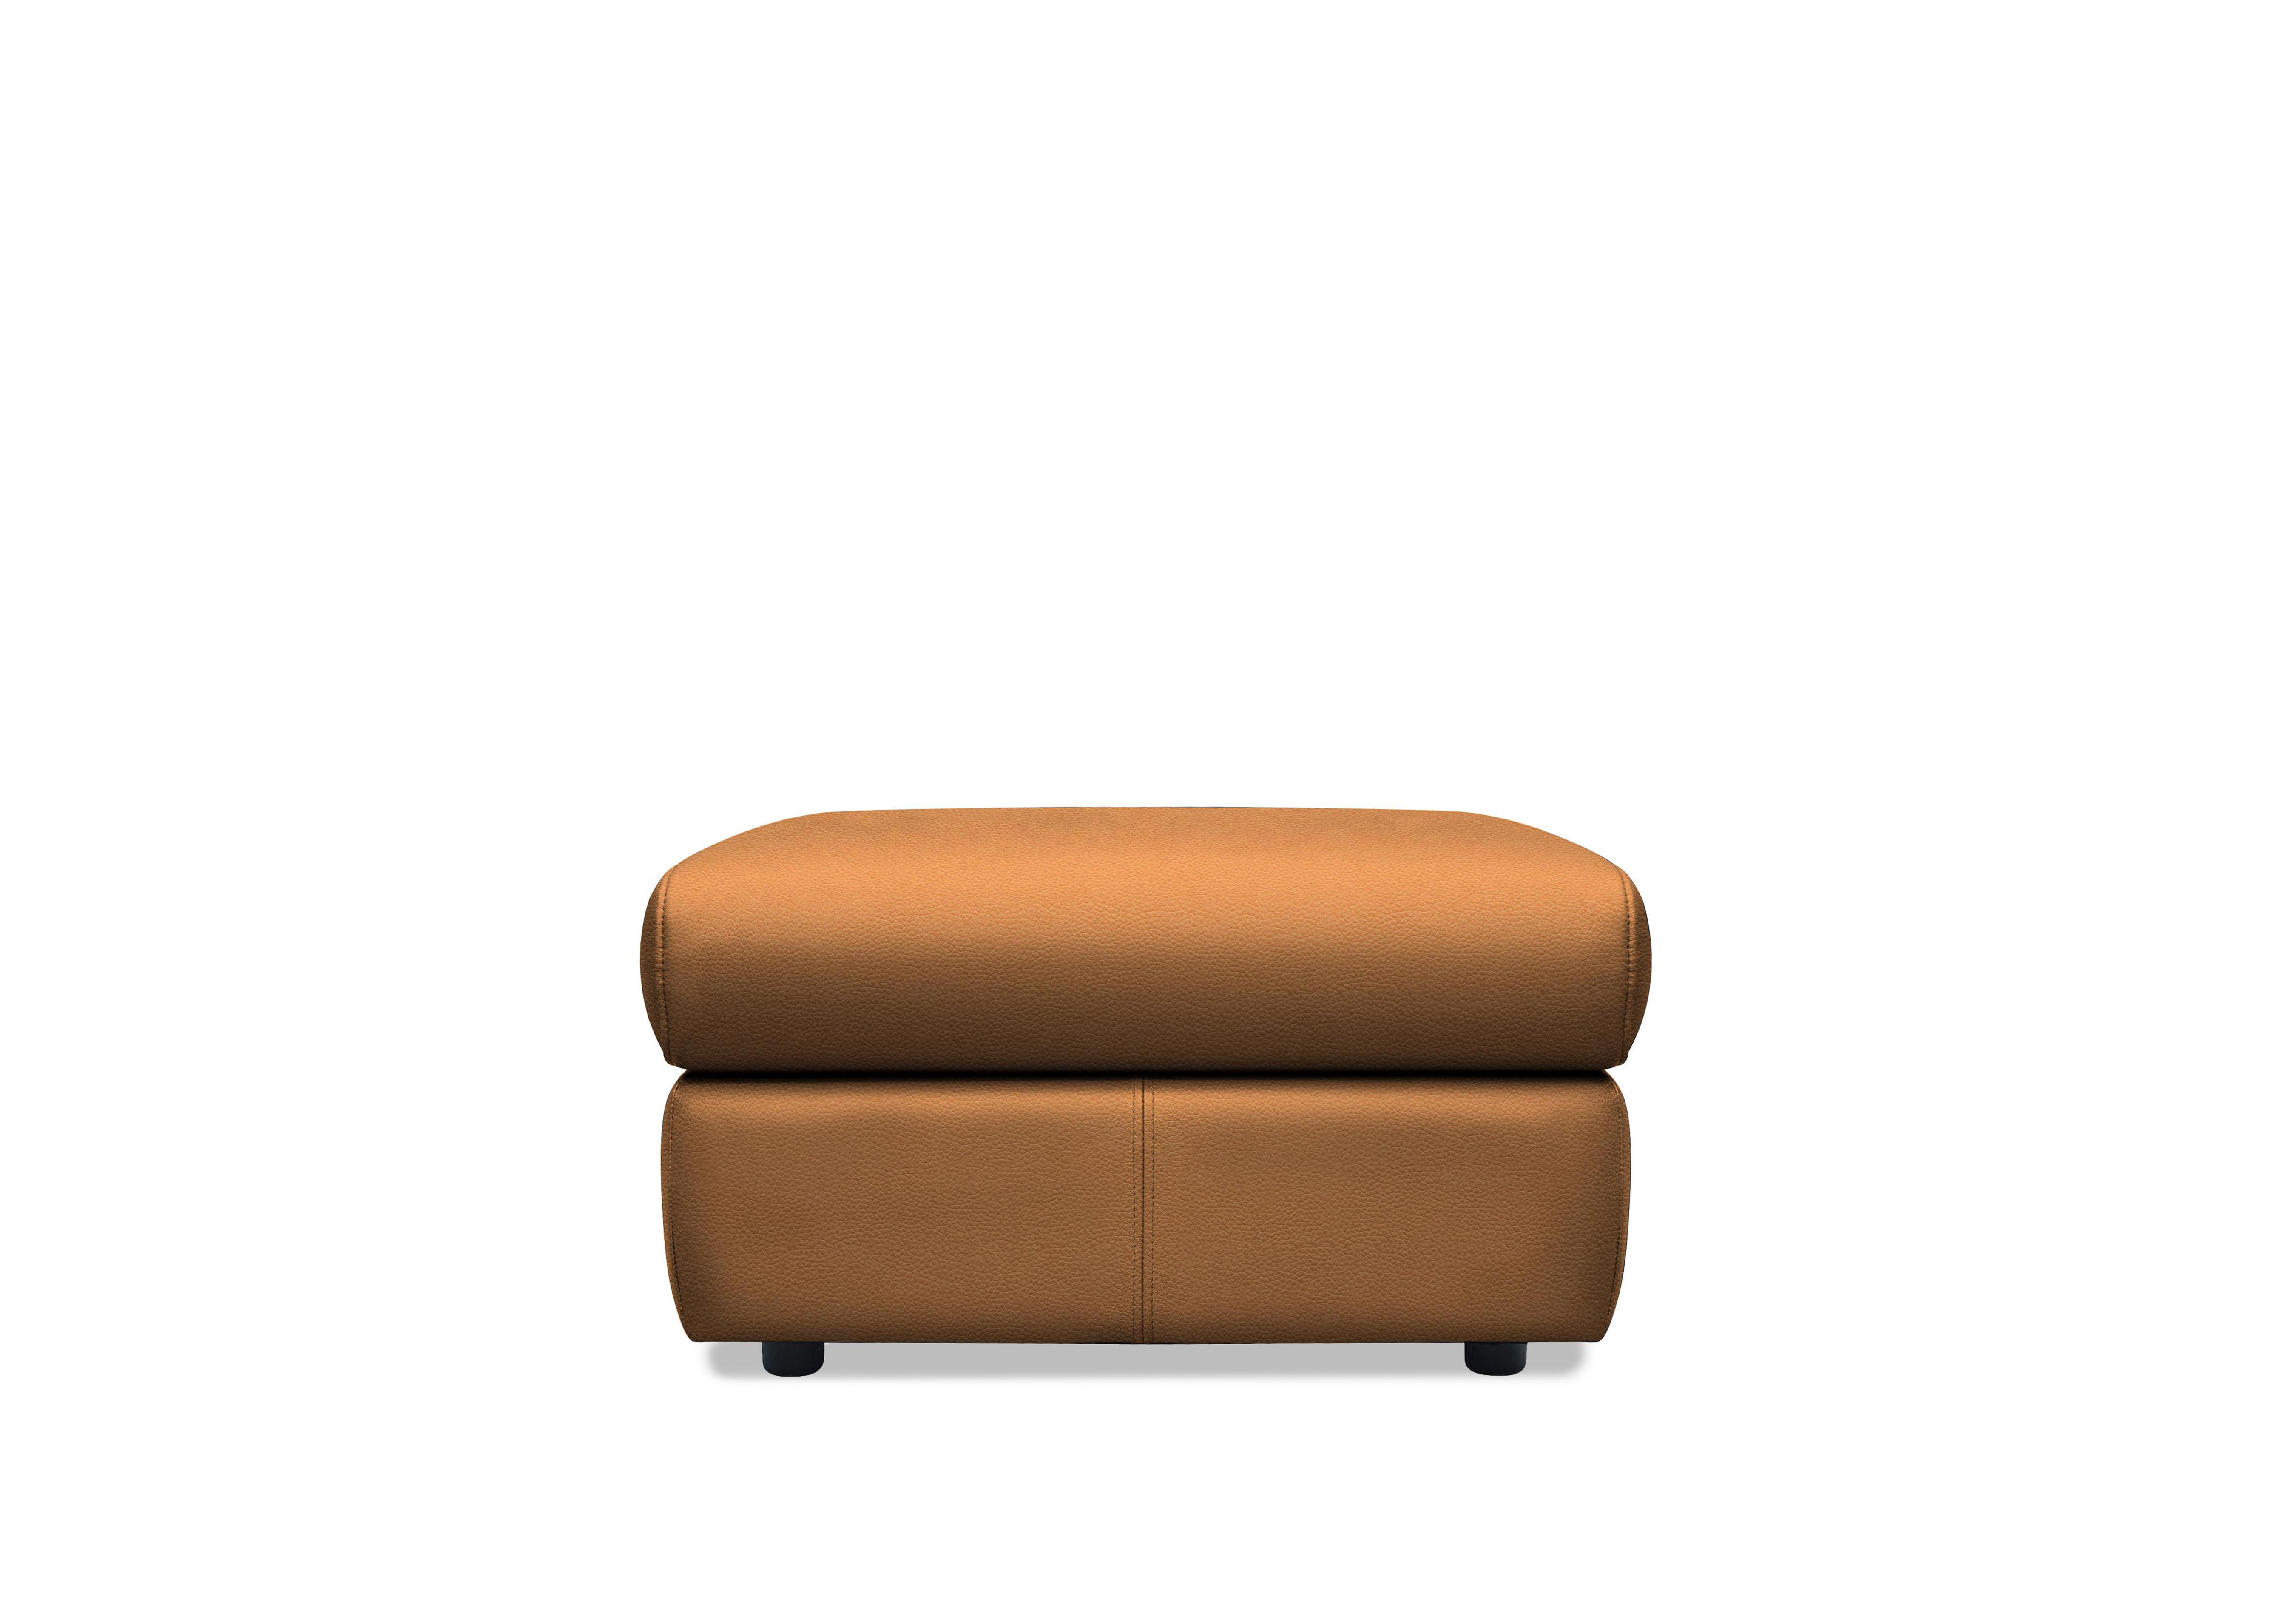 Thornbury Leather Storage Footstool in L847 Cambridge Tan on Furniture Village